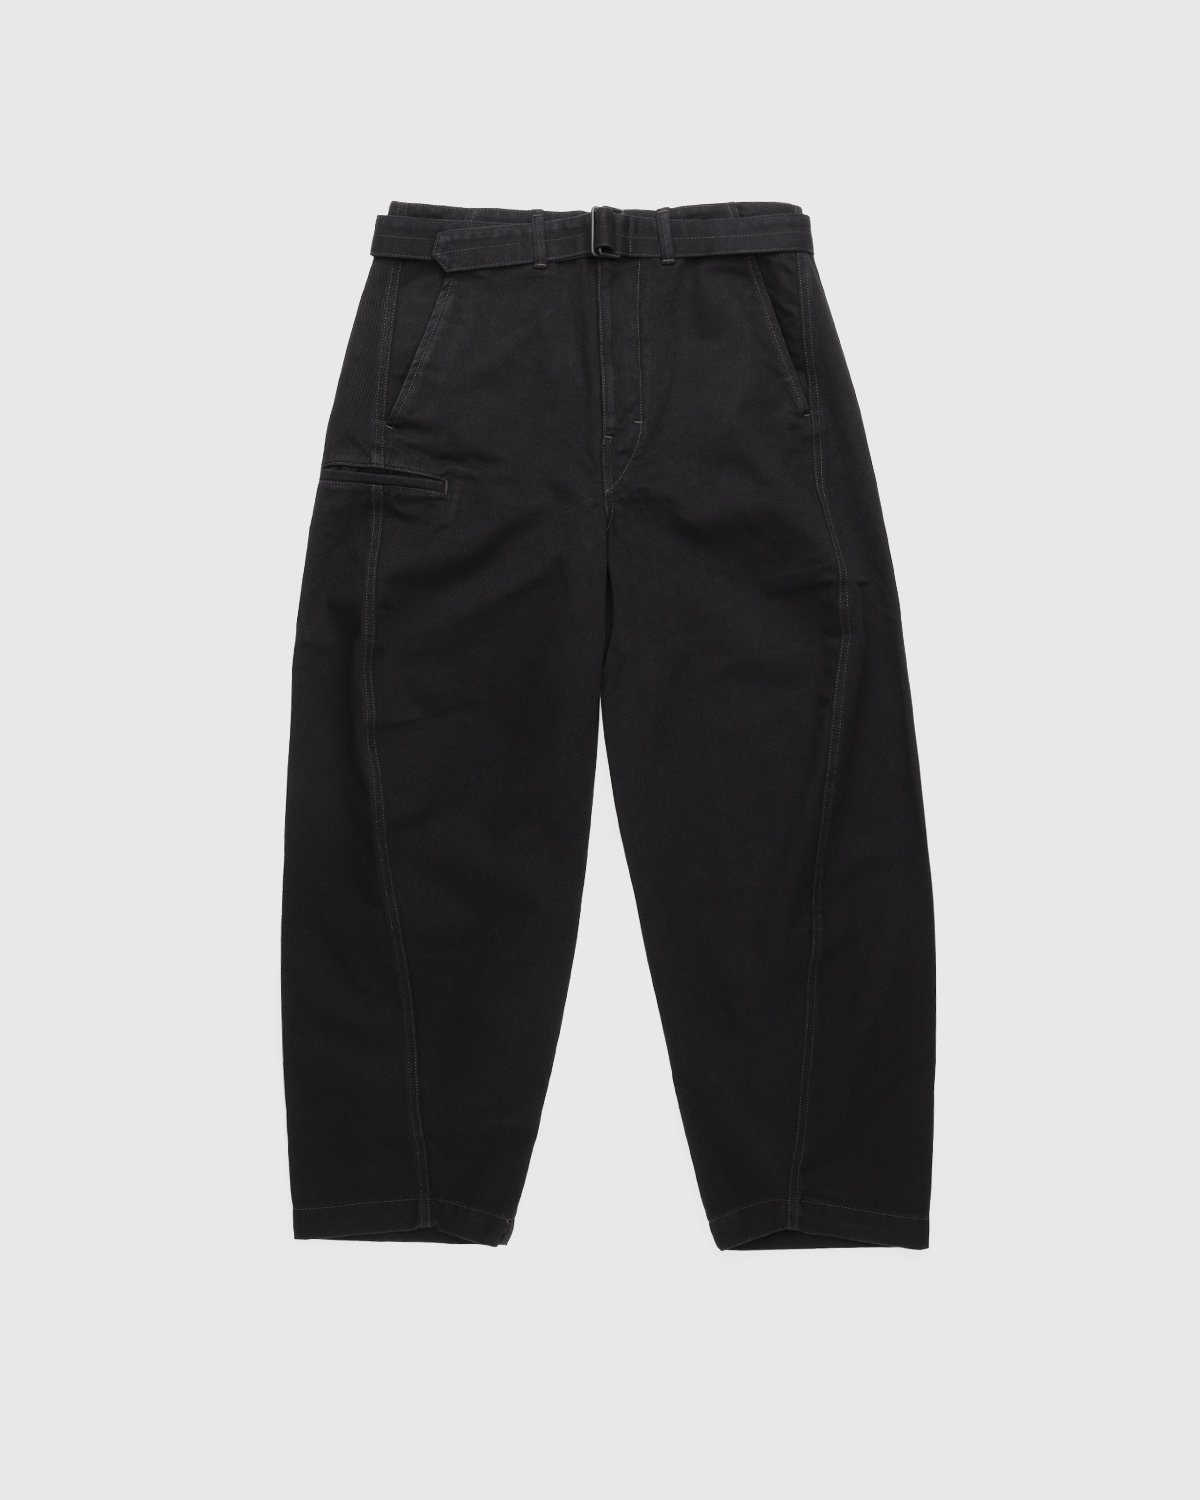 Lemaire - Rinsed Denim Twisted Pants Black - Clothing - Black - Image 1